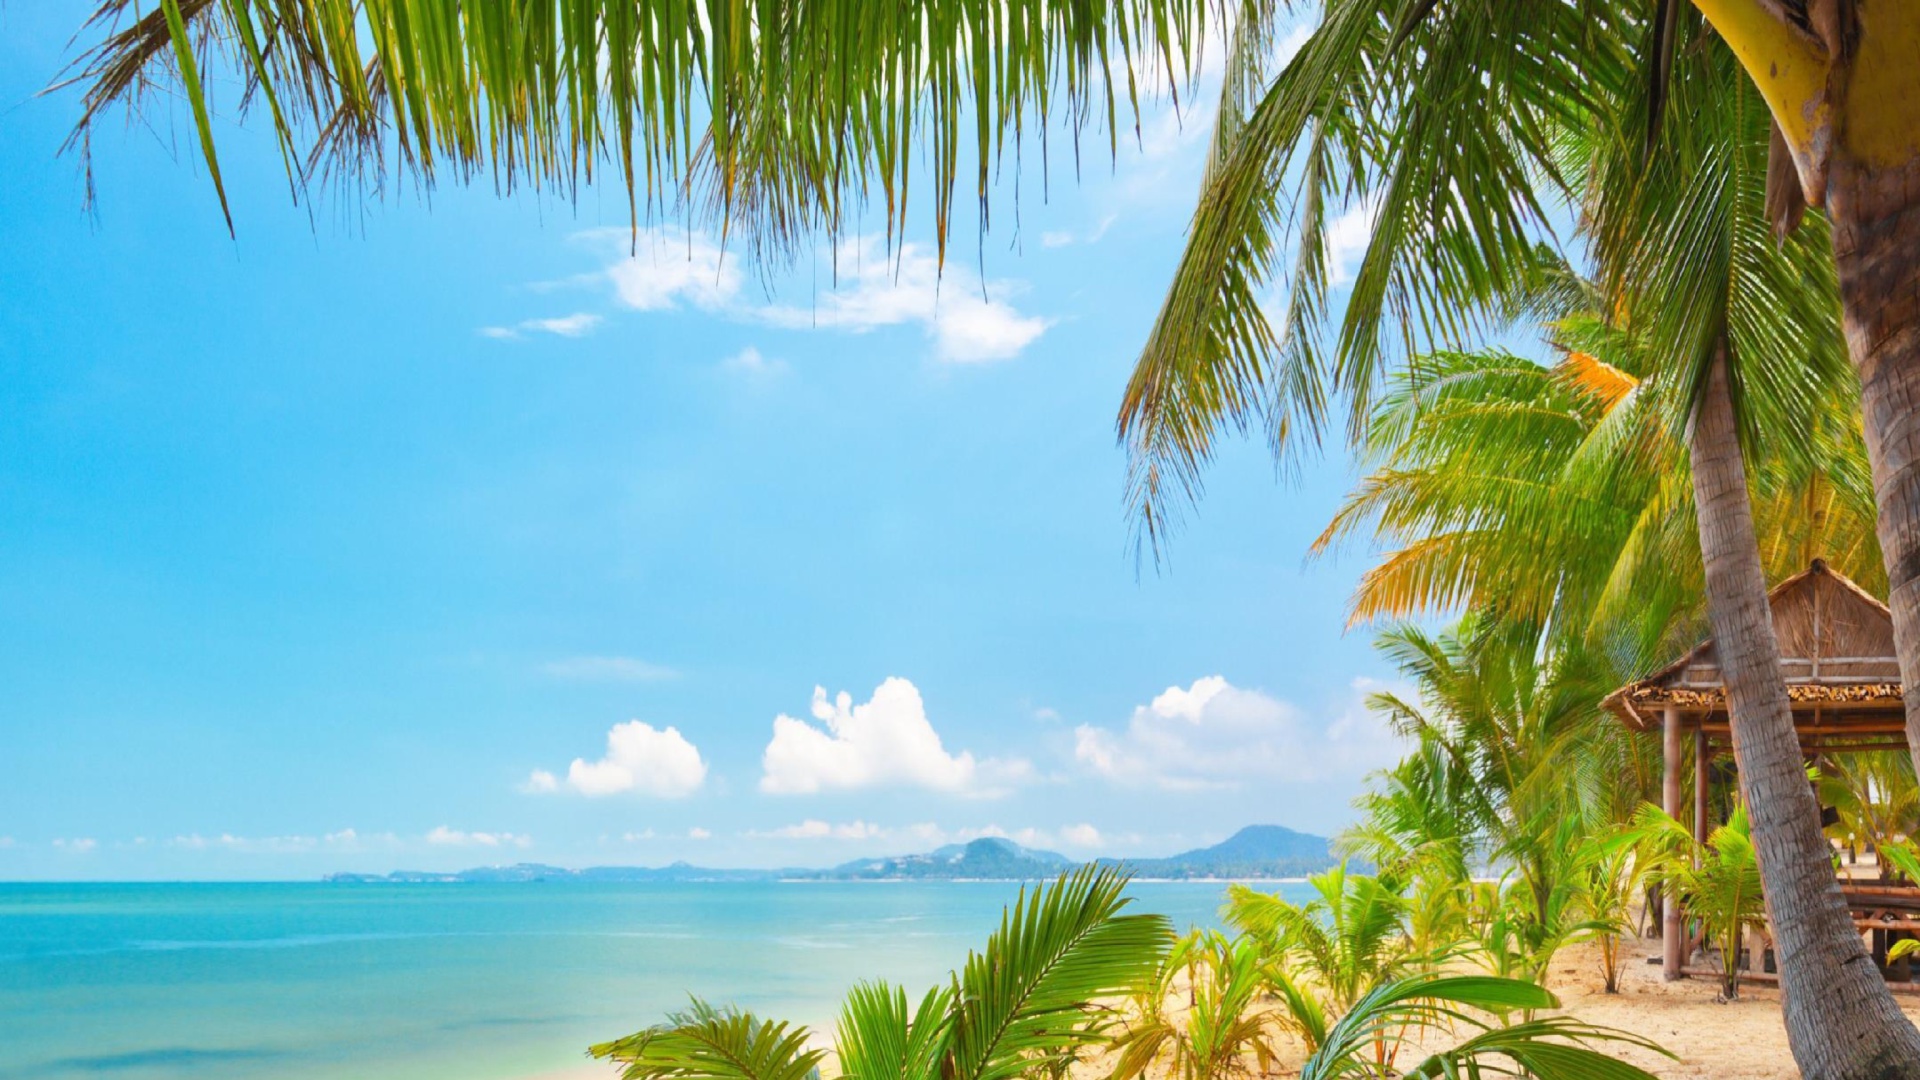 Palm Beach Punta Cana Wallpaper For Desktop Full HD